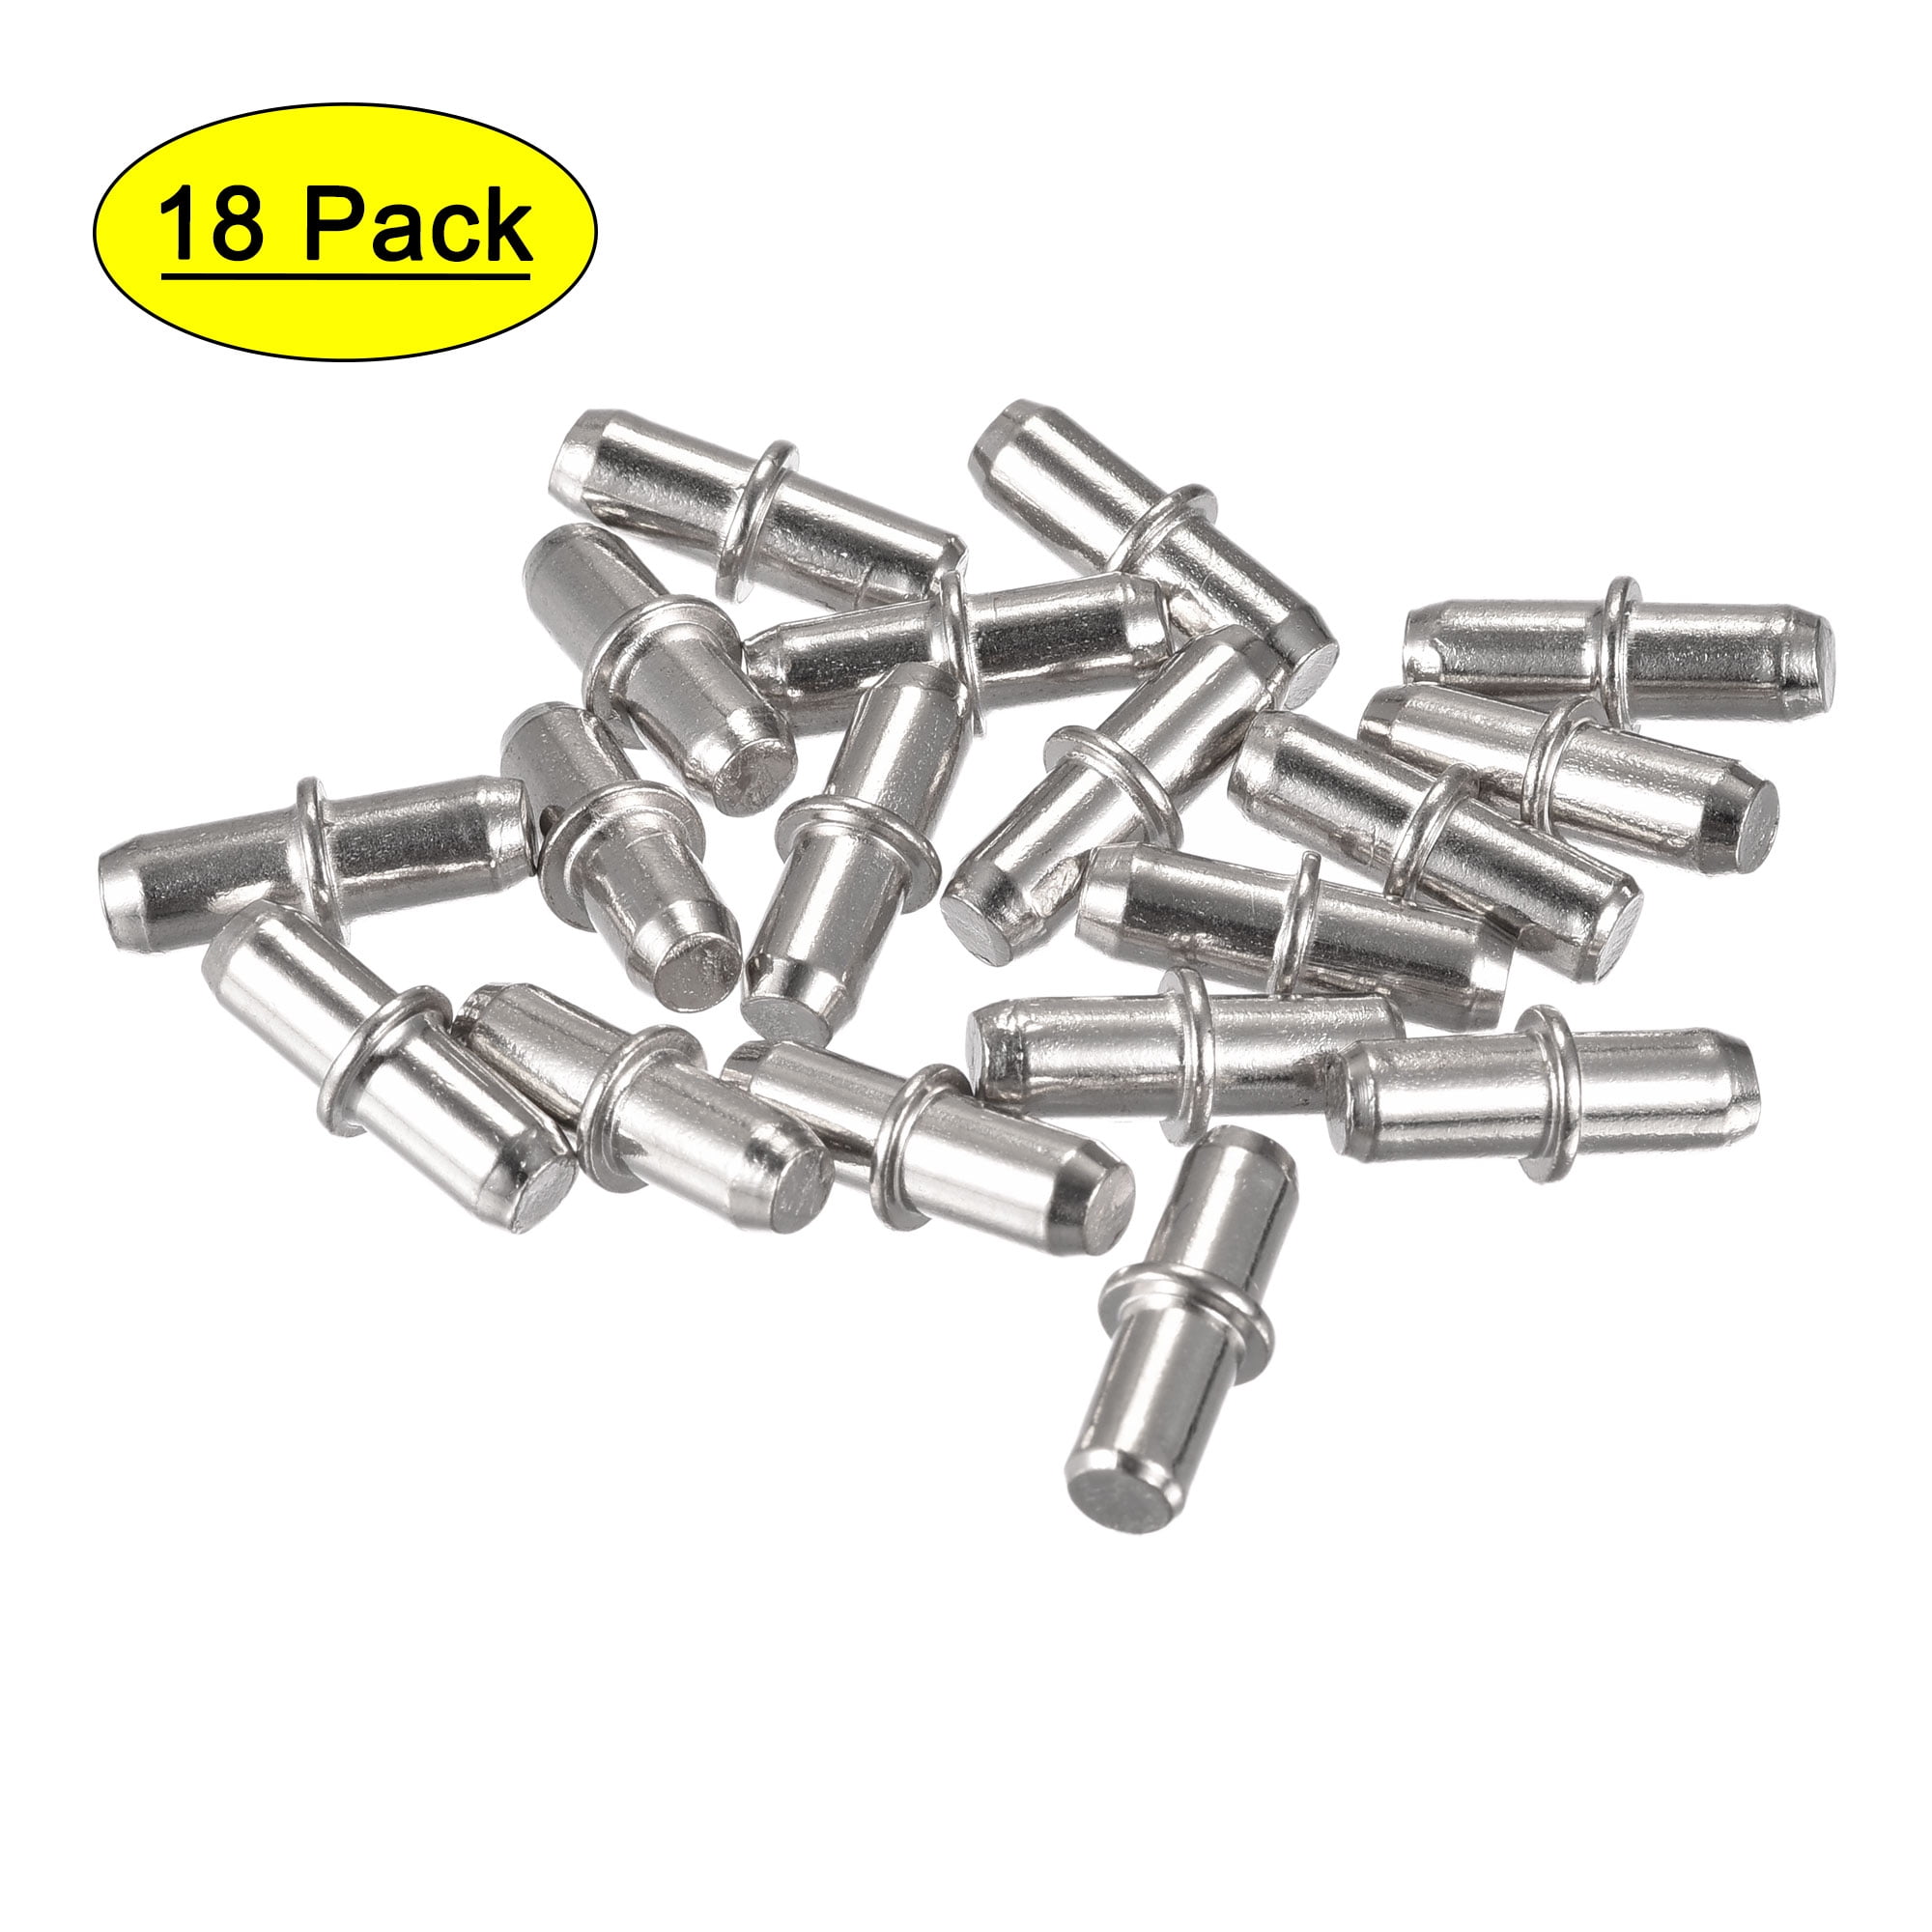 POWERTEC 5mm Shelf Pins, 50PK L-Shaped Bracket Style, Cabinet Shelf Pegs, Shelf  Peg 5 mm, Nickel (QP1302) 